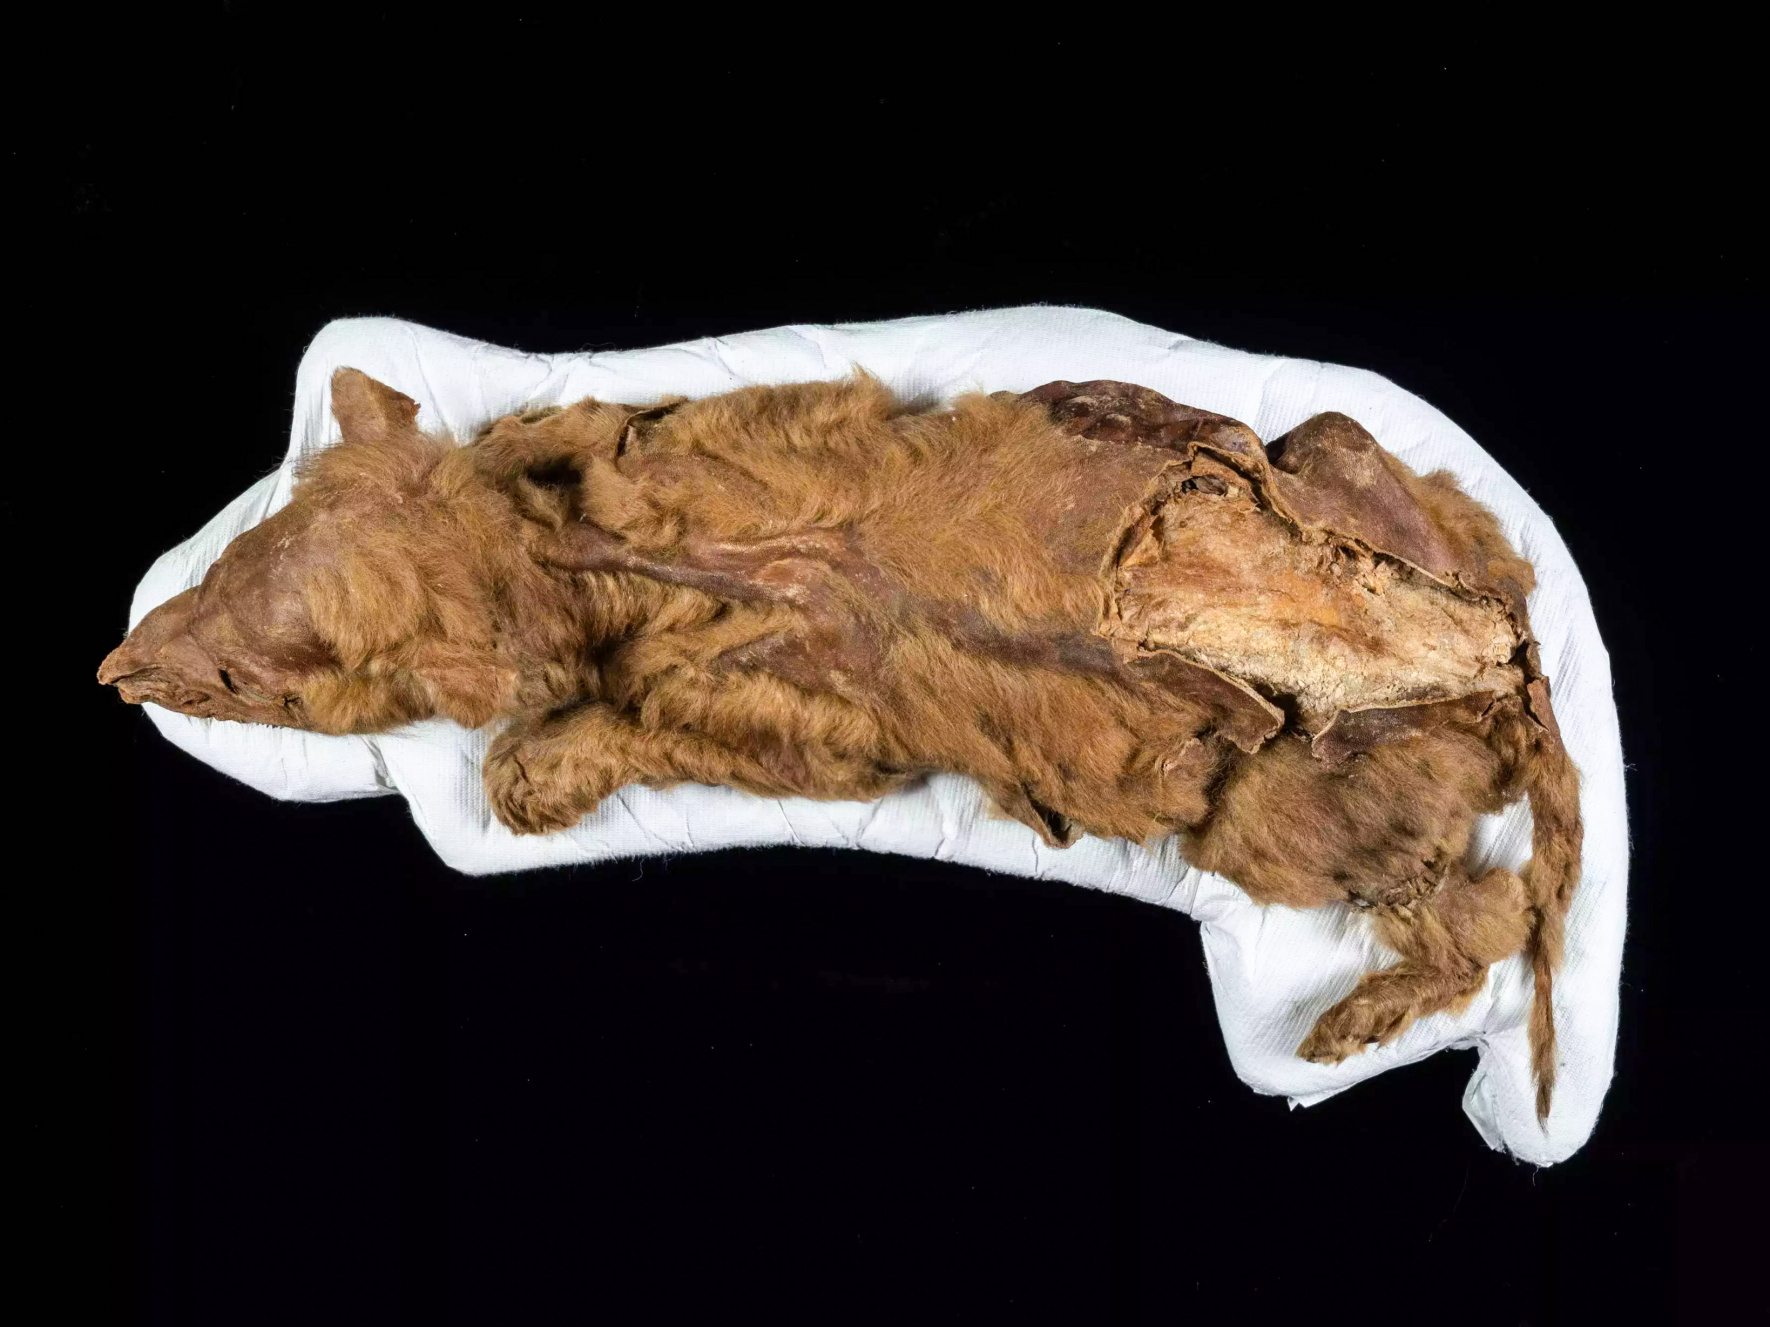 En gammel ulvehvalp blev fundet perfekt bevaret i permafrost i Yukon, Canada.